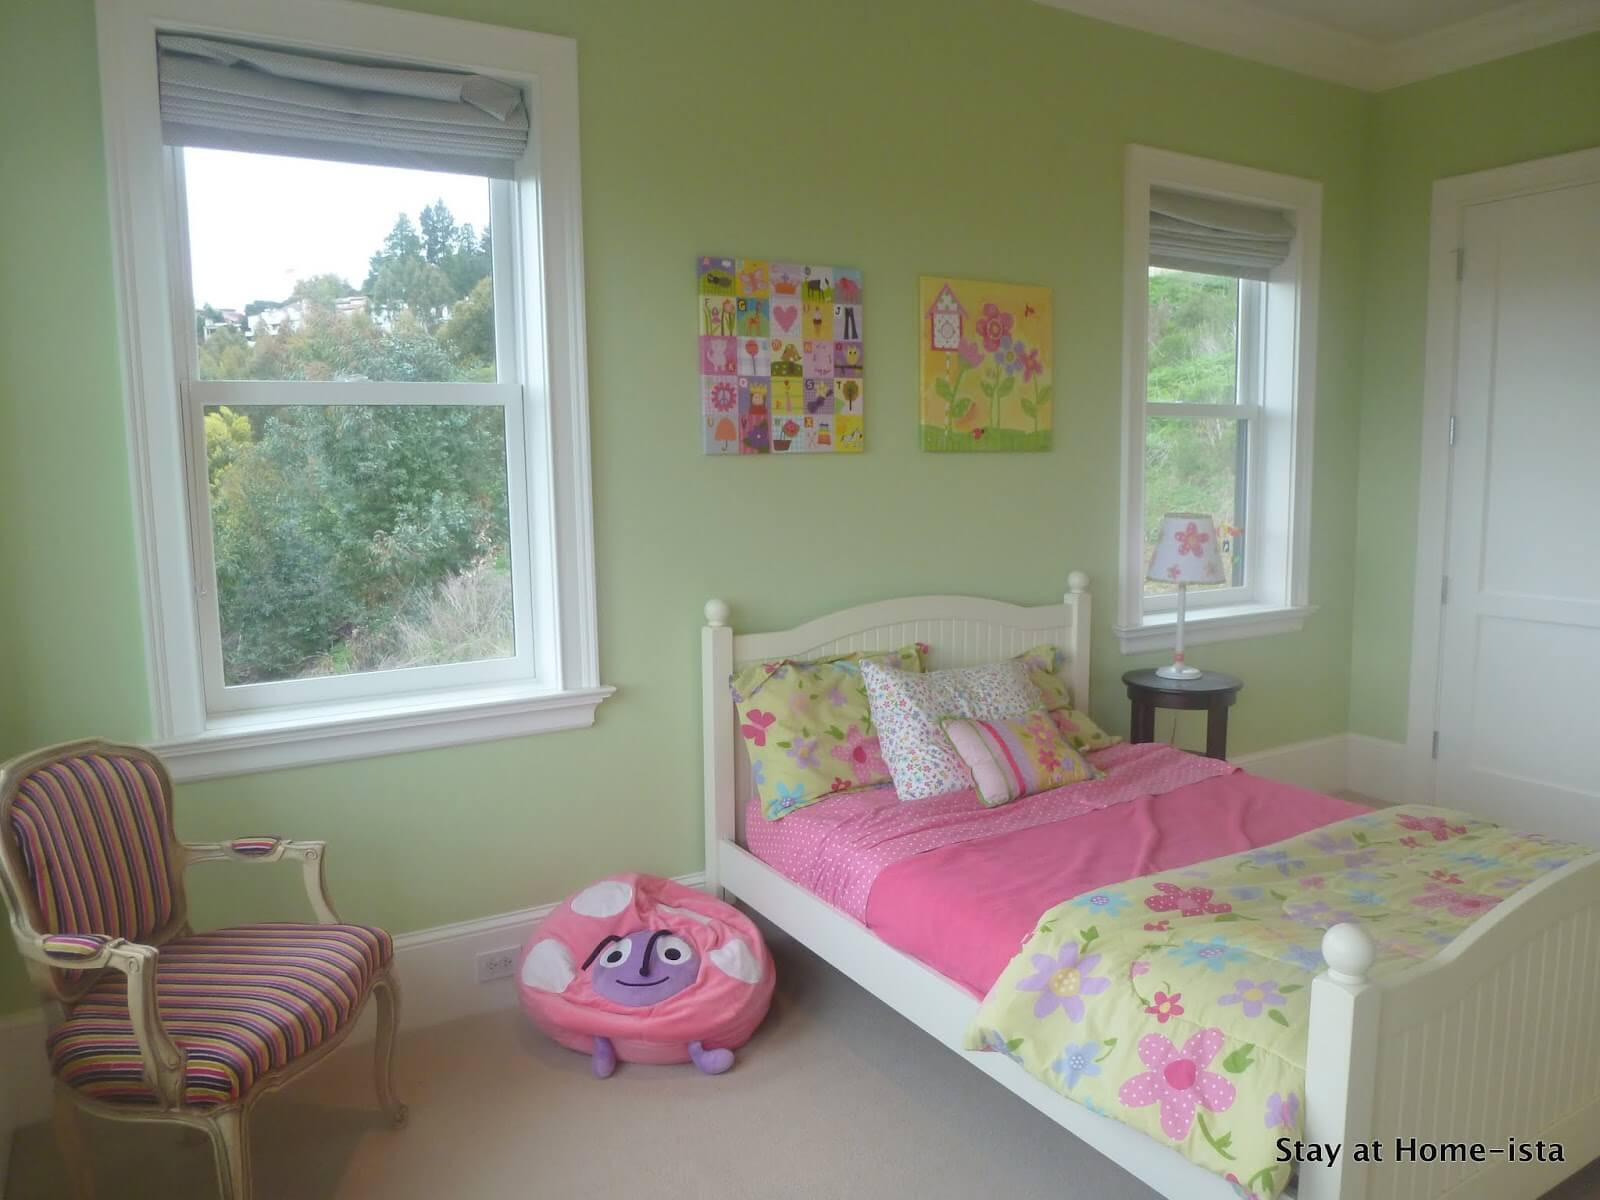 Girl Bedroom Painting Ideas
 Top 10 Girls Bedroom Paint Ideas 2017 TheyDesign